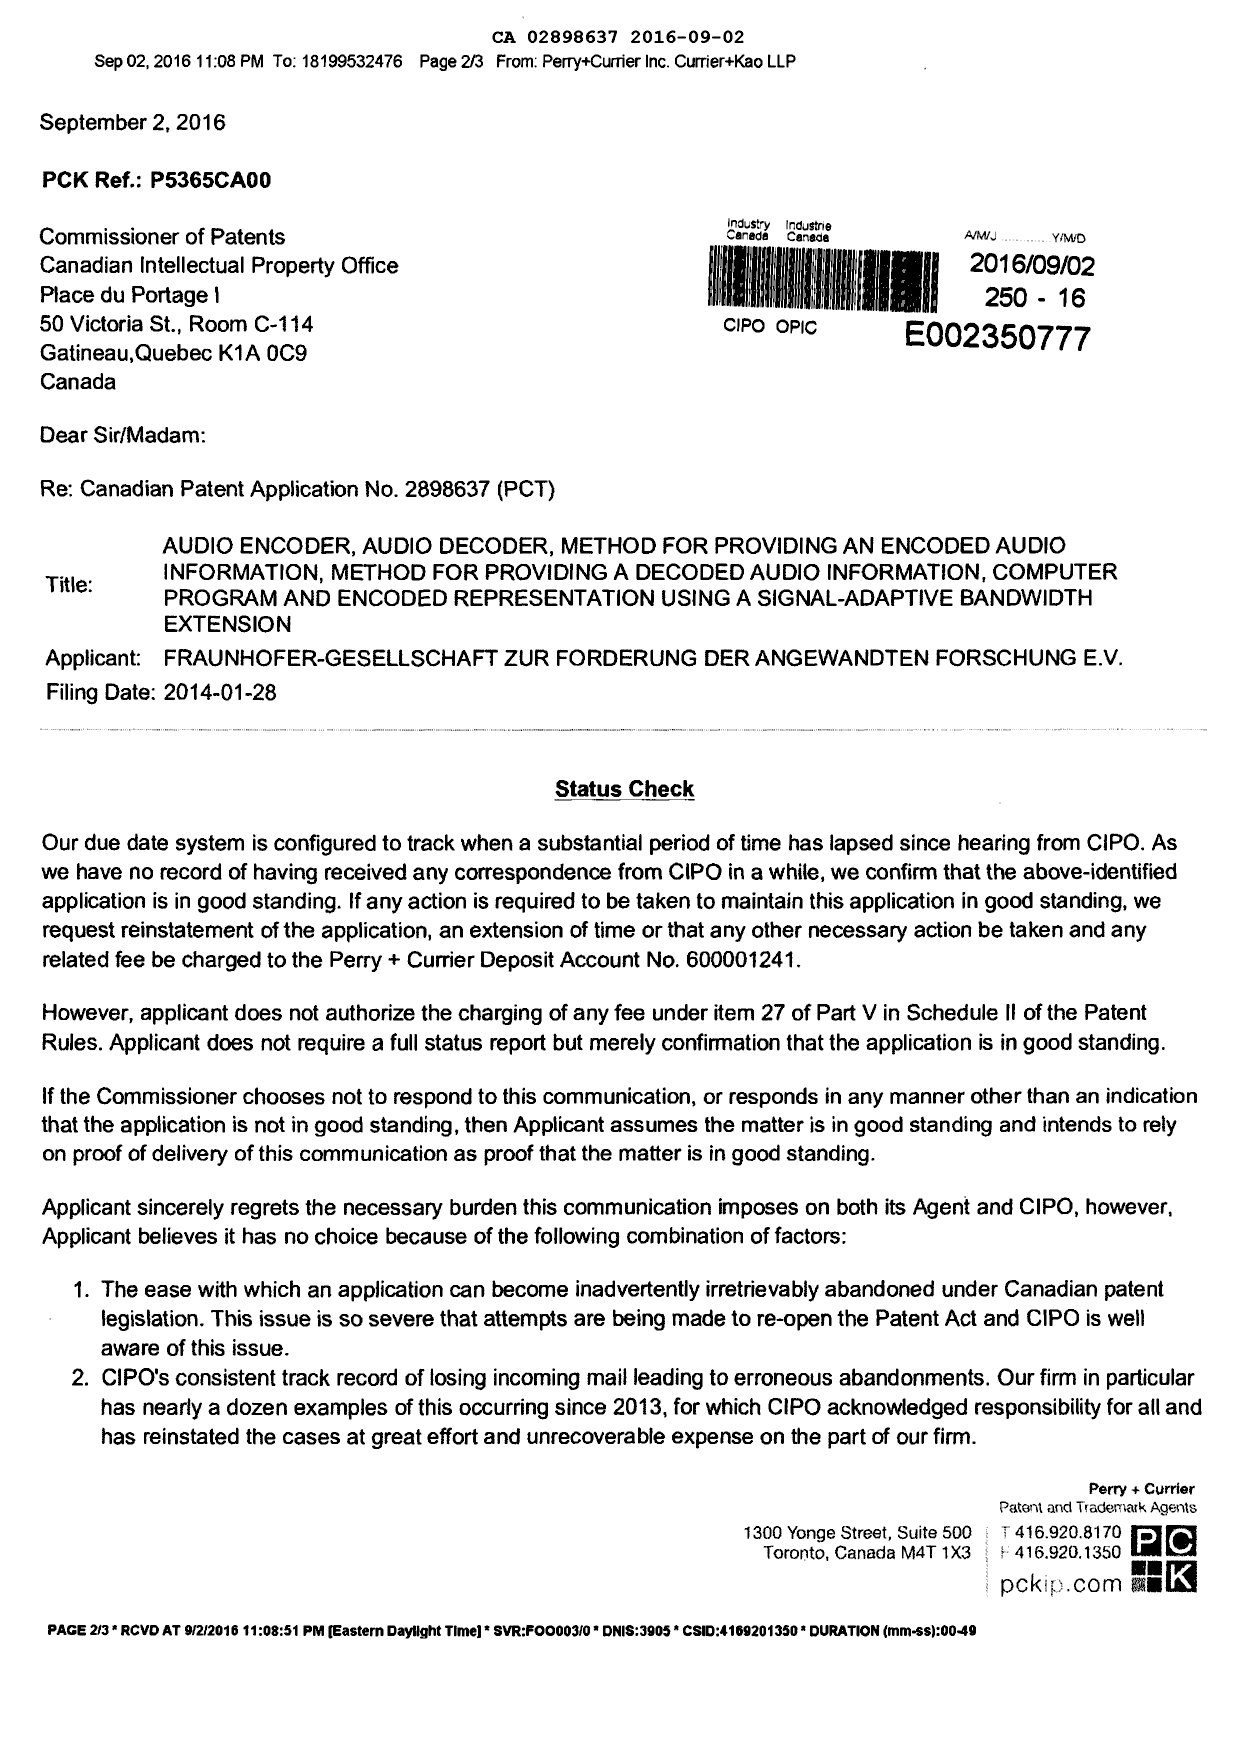 Canadian Patent Document 2898637. Correspondence 20160902. Image 1 of 3